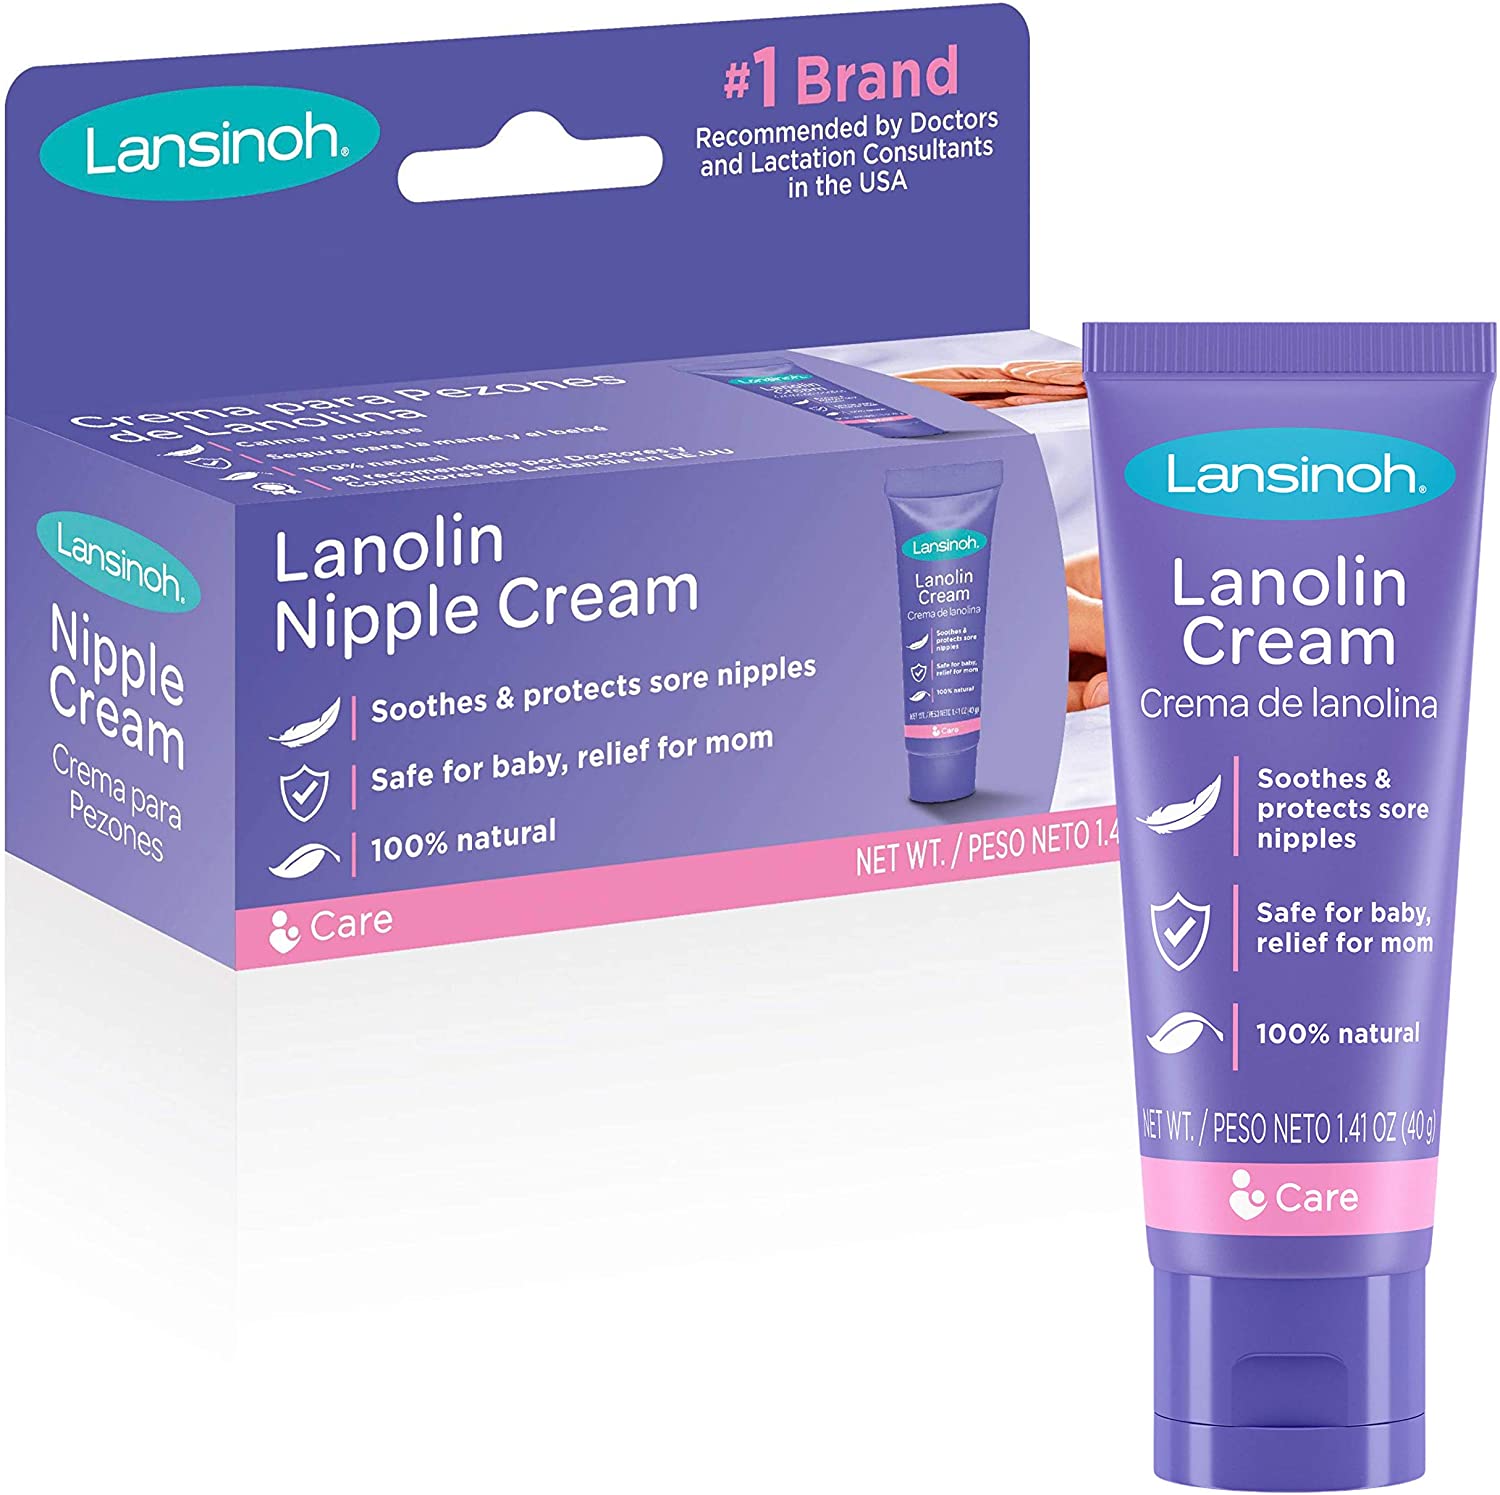 100% Lanolin Free, Organic Nipple Crack Nipple Cream for